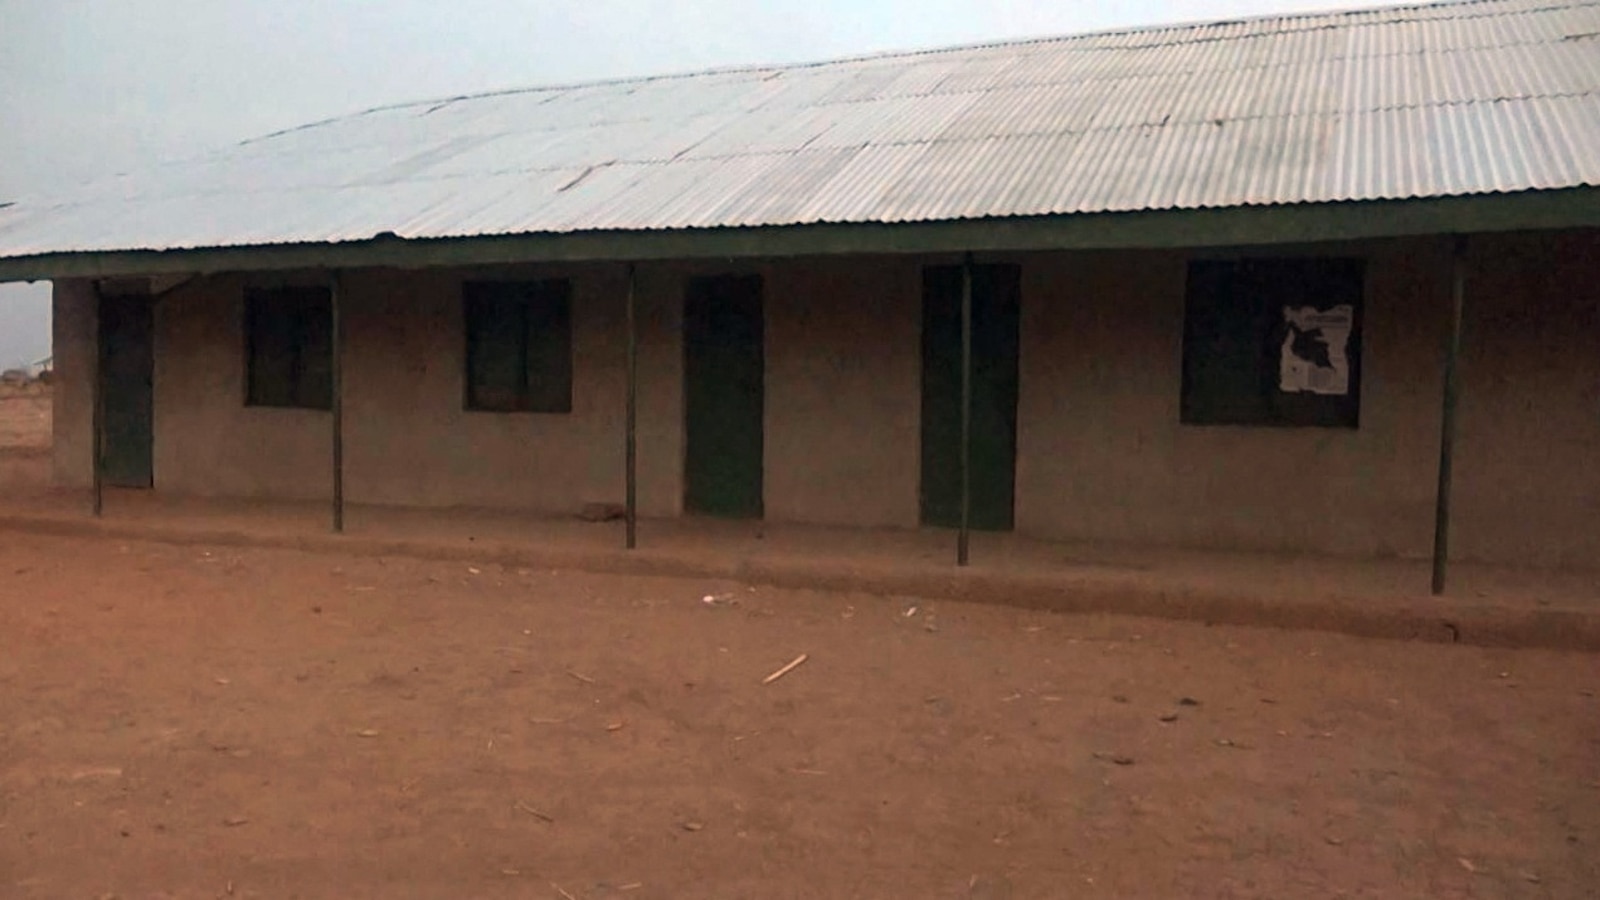 Bandits kidnap dozens of school children in Nigeria